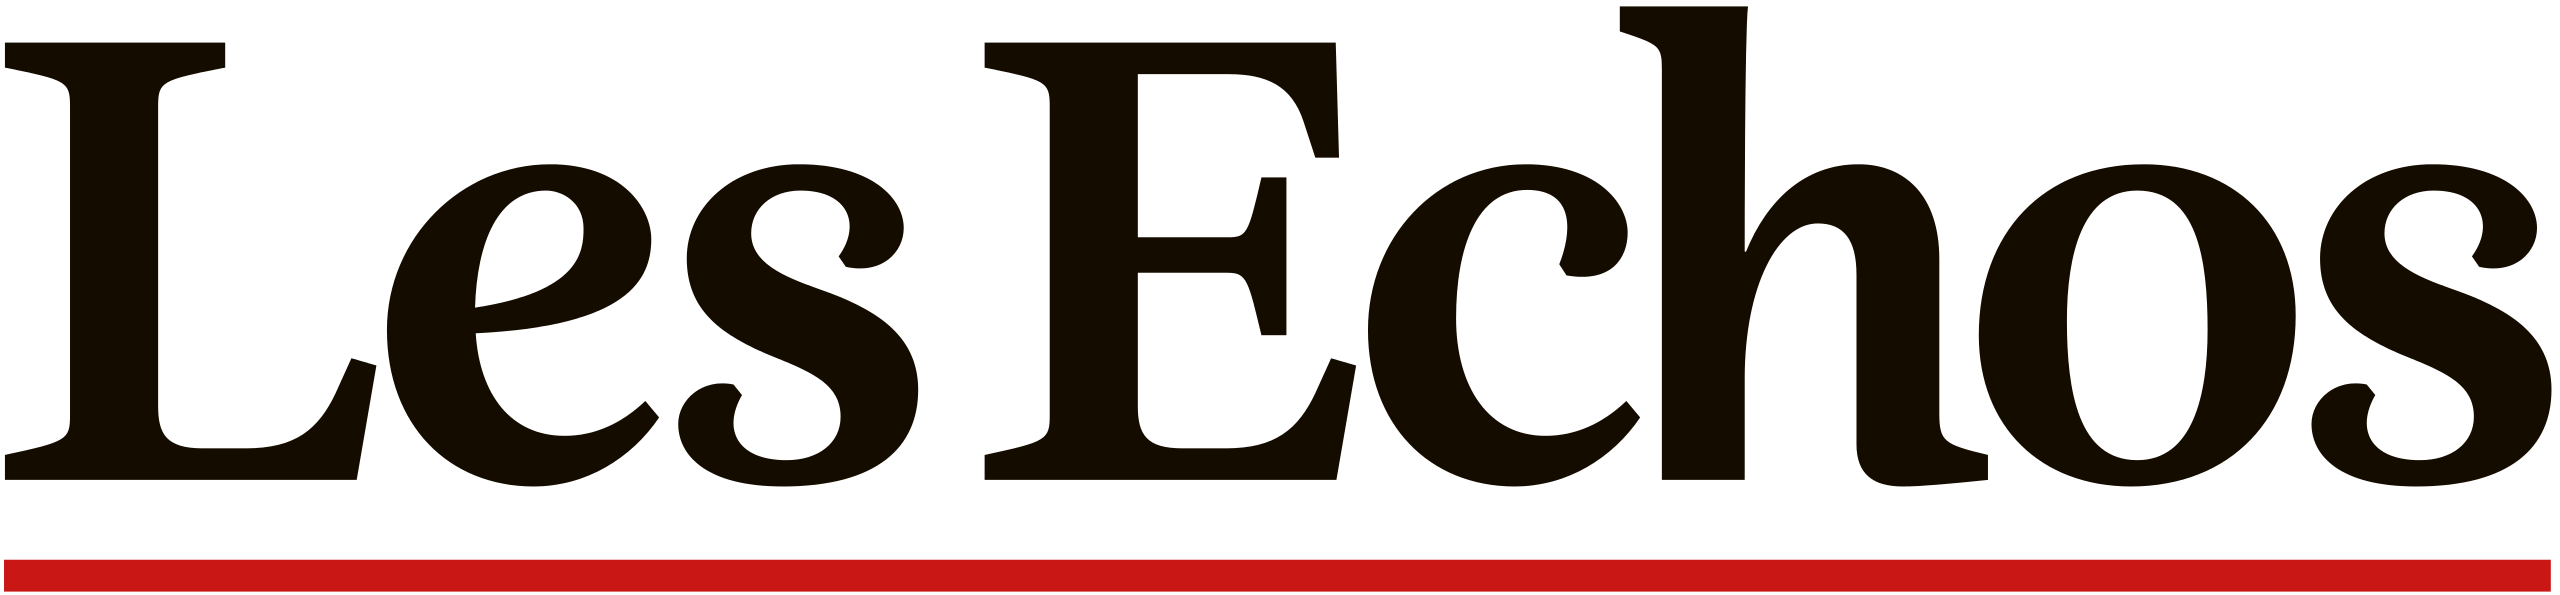 Logo Les Echos_Laborantin 